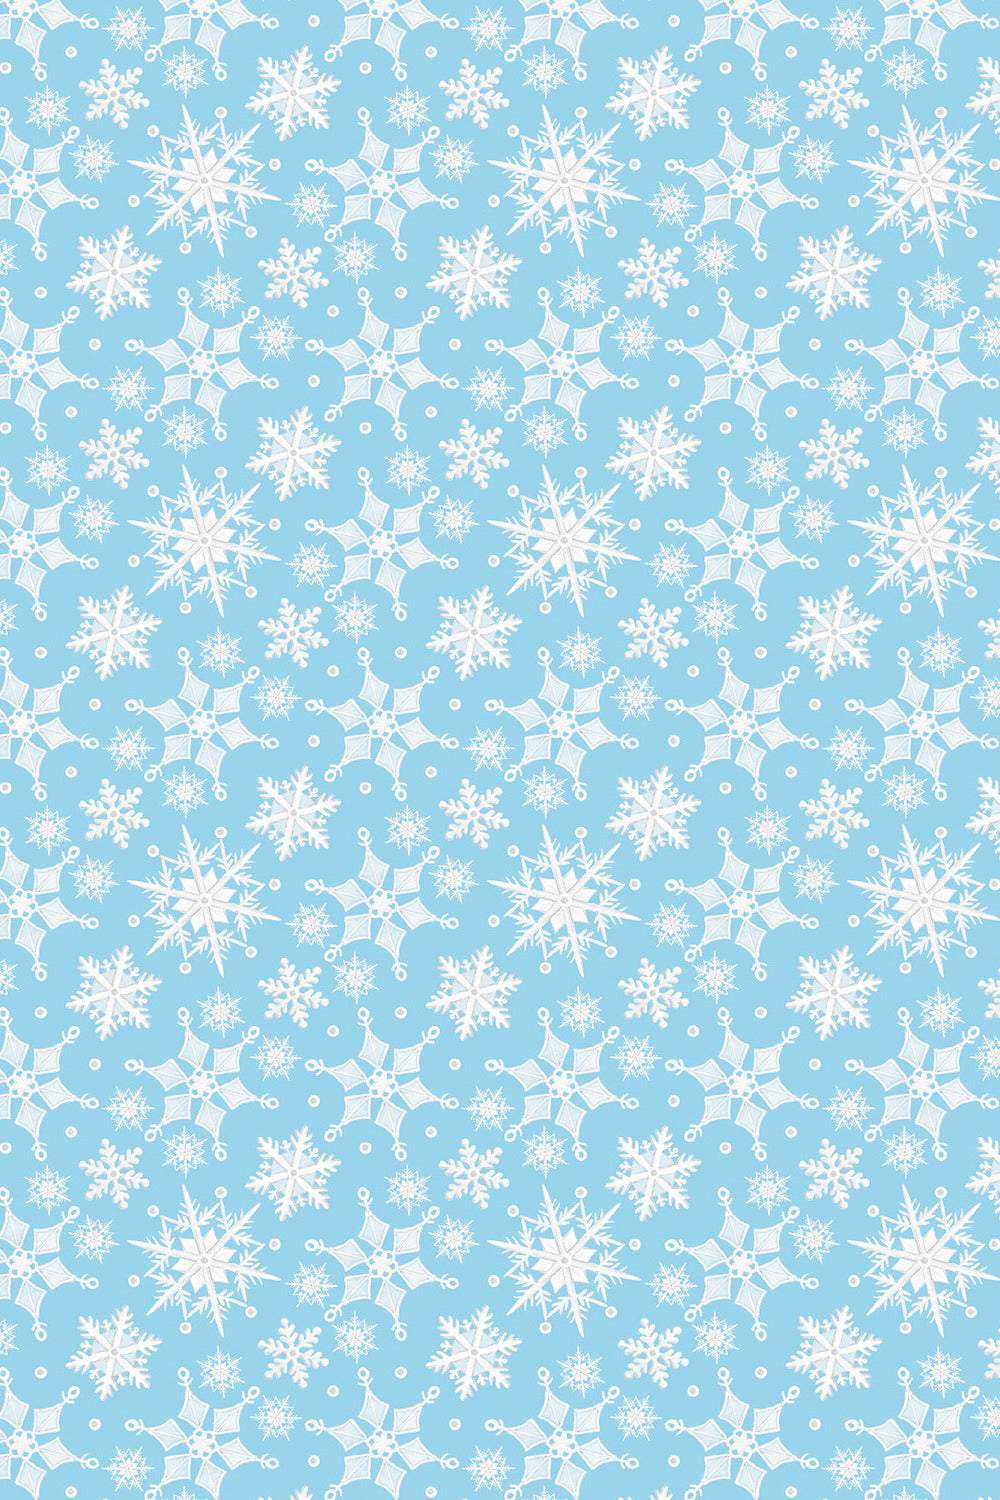 Gnome Wonderland Wonderland Snowflake By Andi Metz For Benartex Sky Blue / White